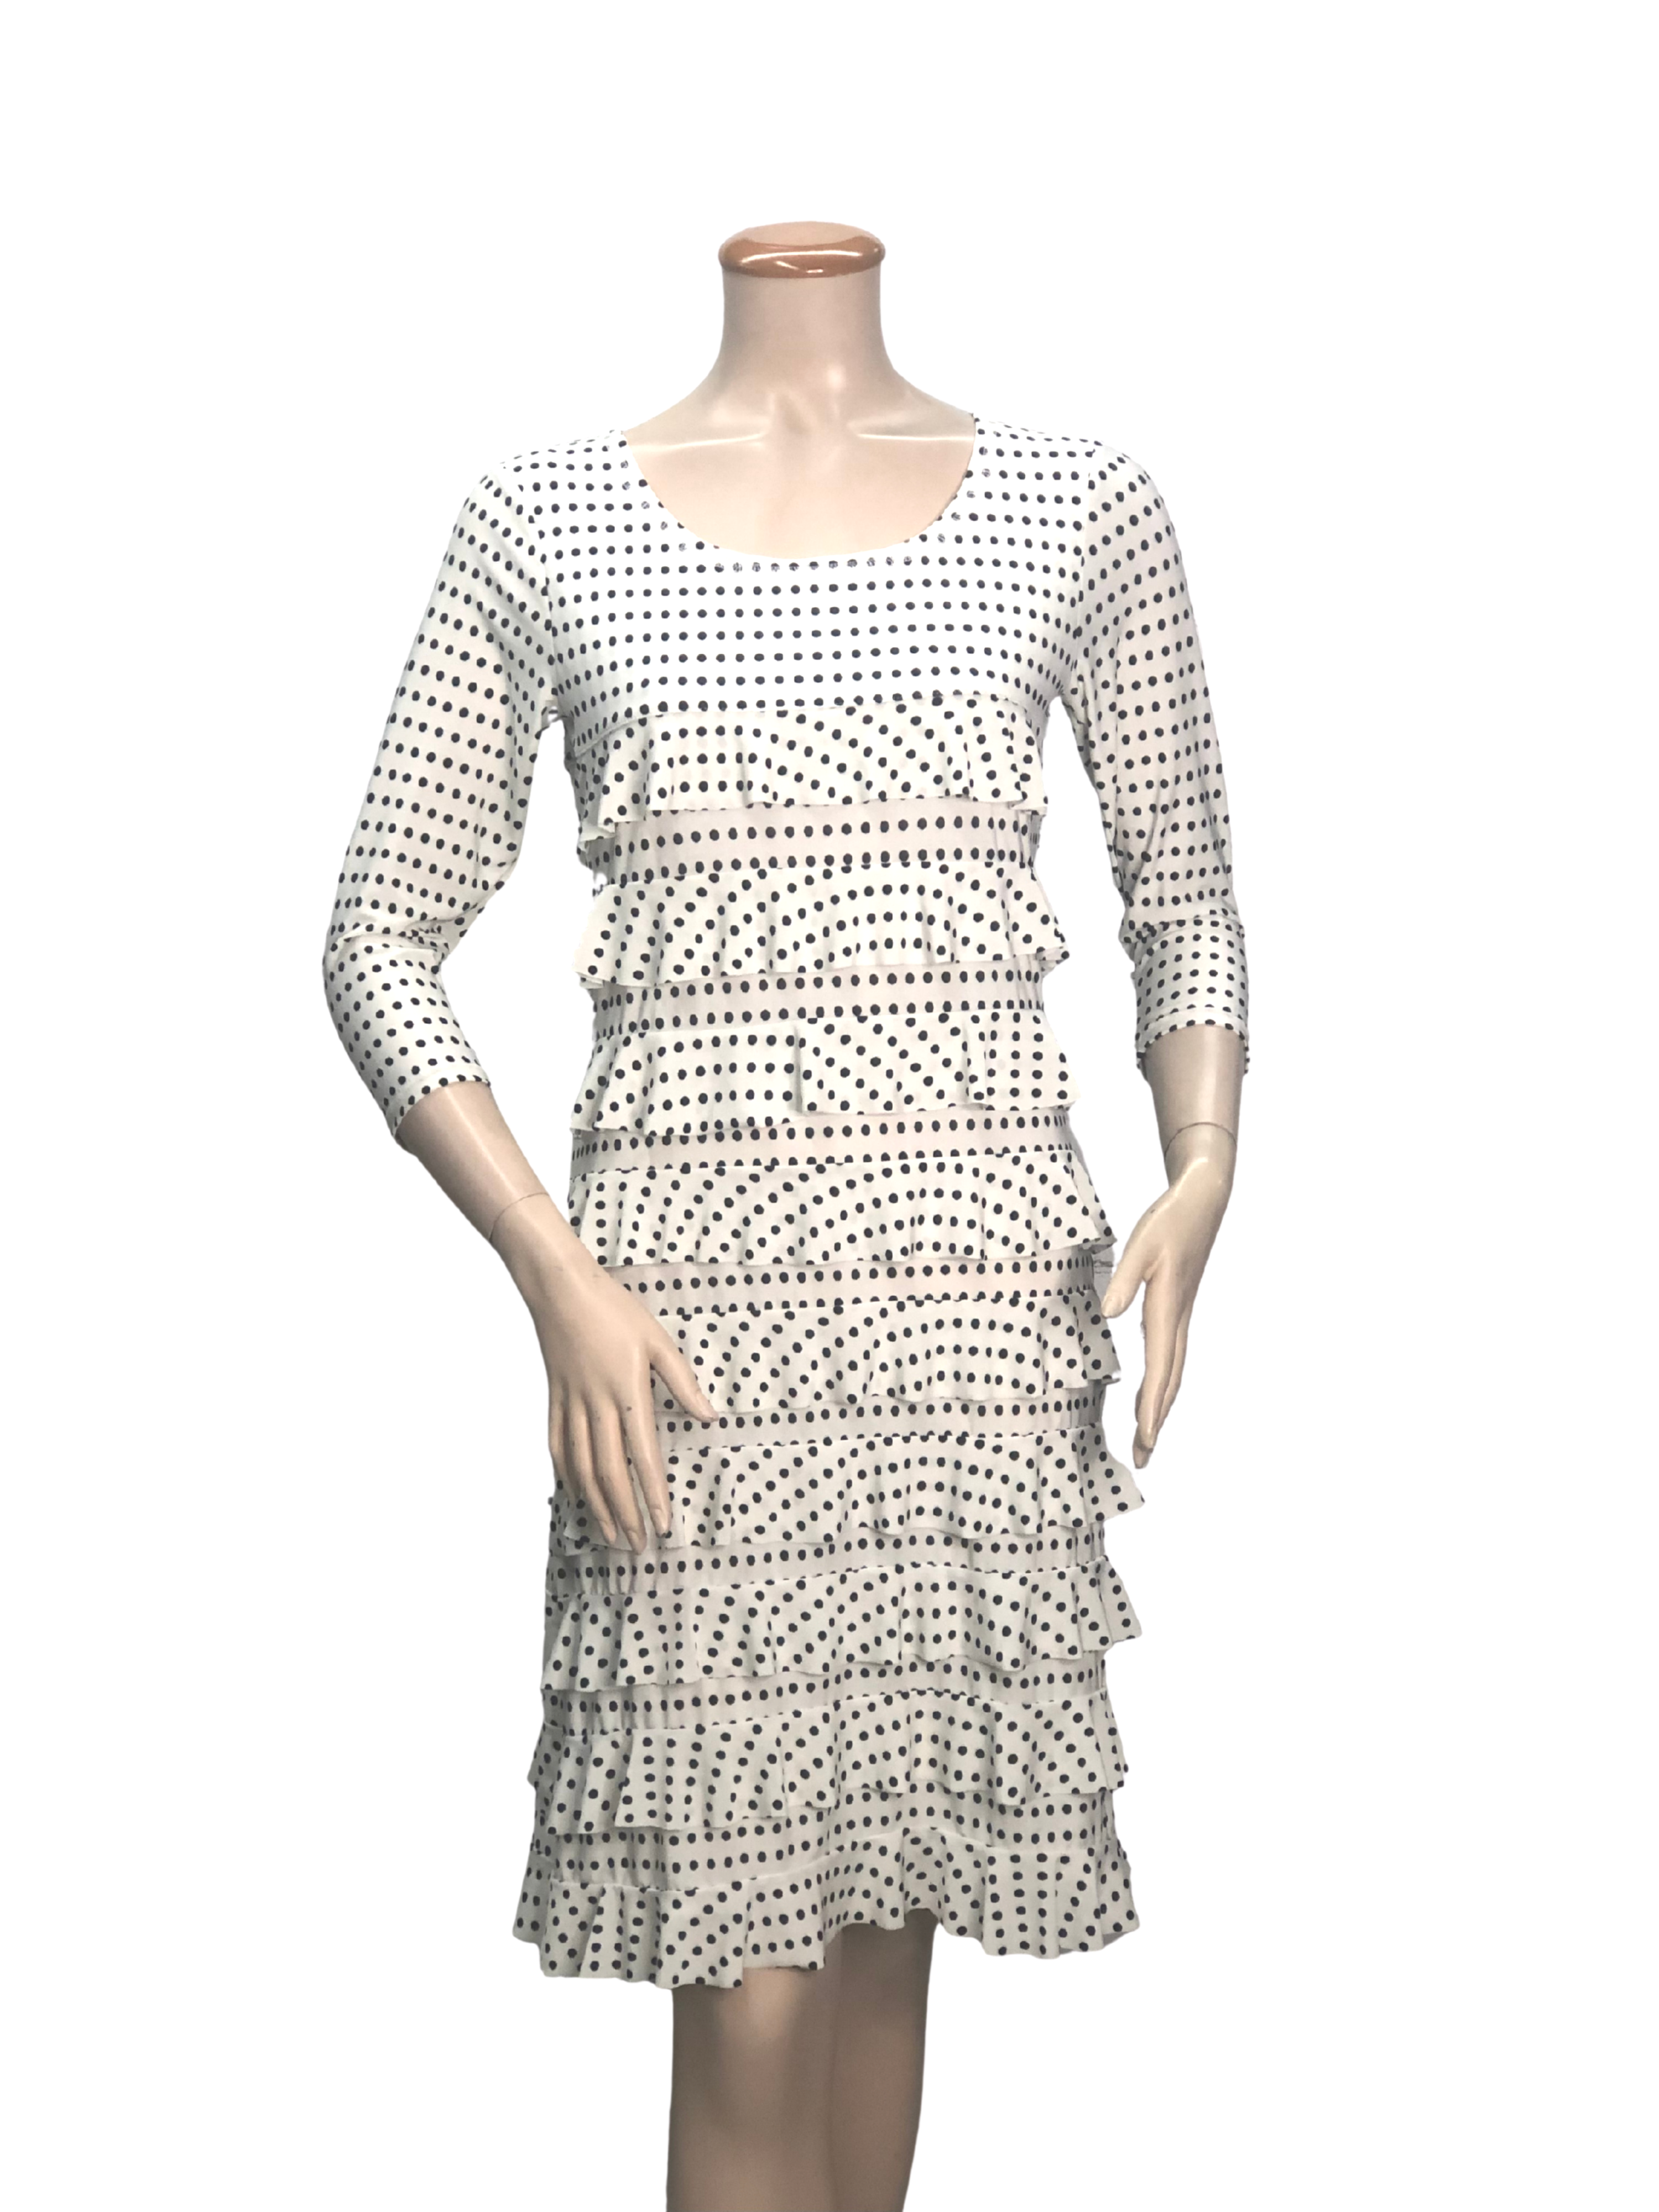 FASHQUE - Ruffle Dress 3/4 Sleeve  - D049 SALE